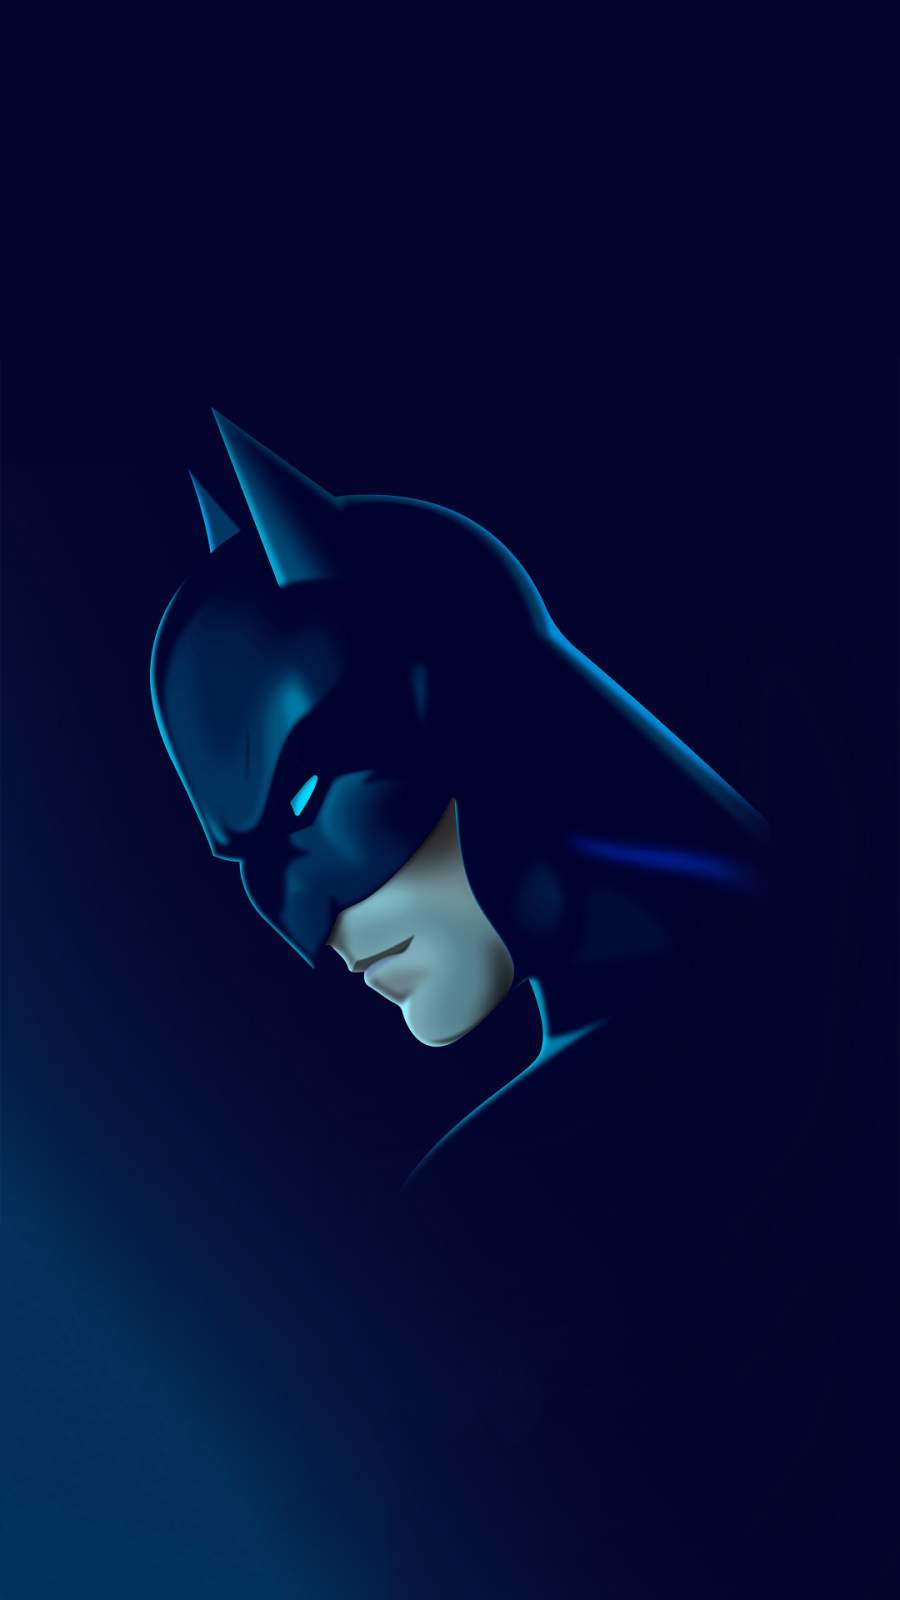 Batman k minimal iphone wallpaper